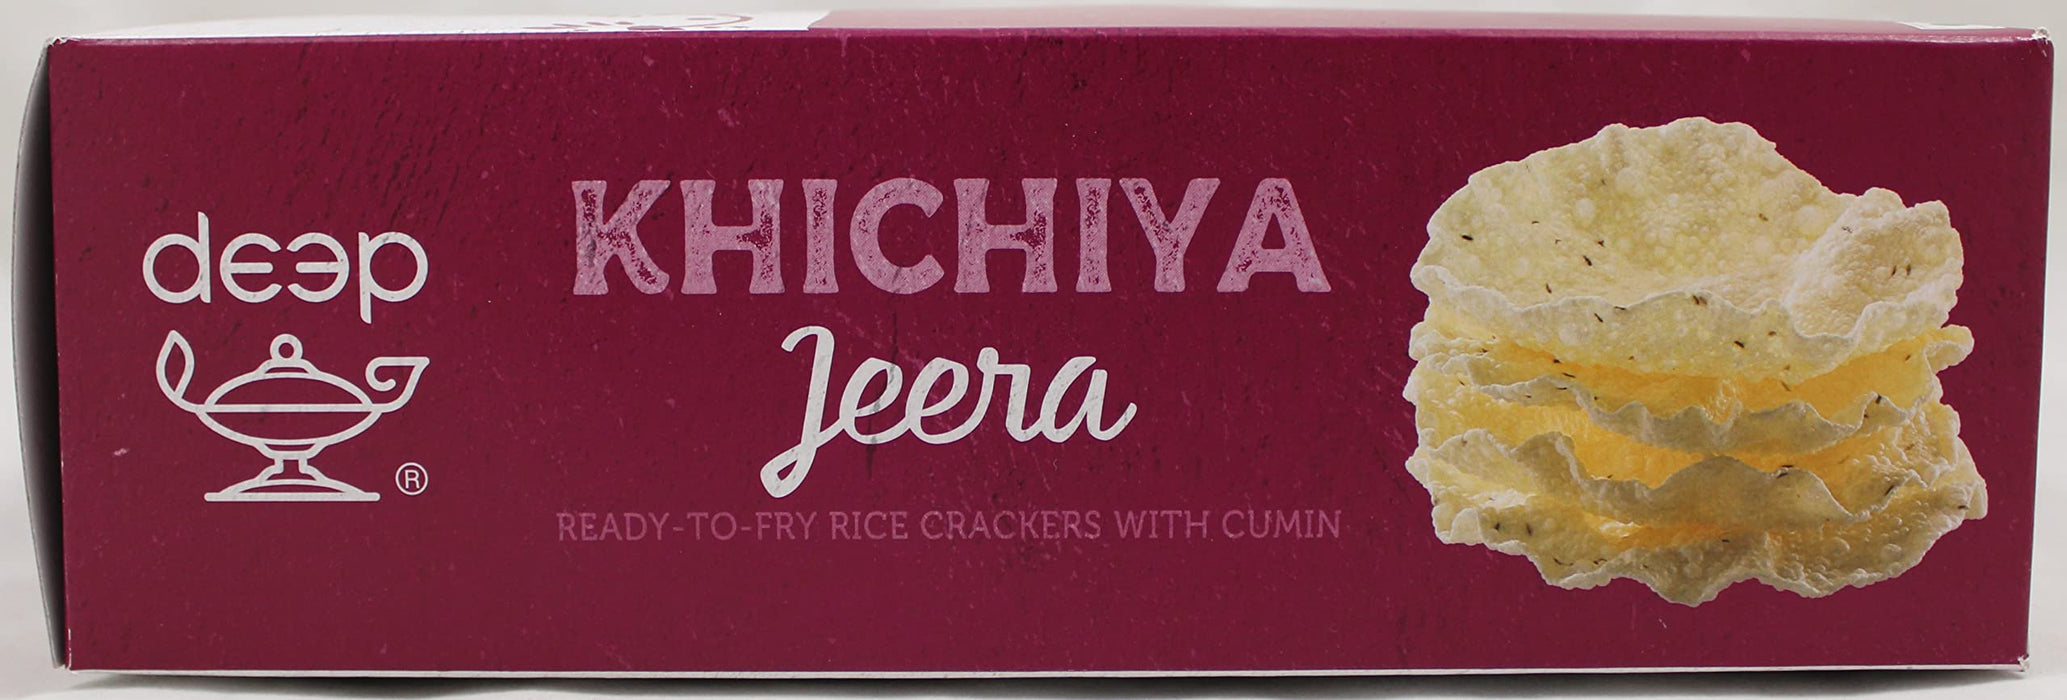 Deep Jeera Khichiya 200 gms